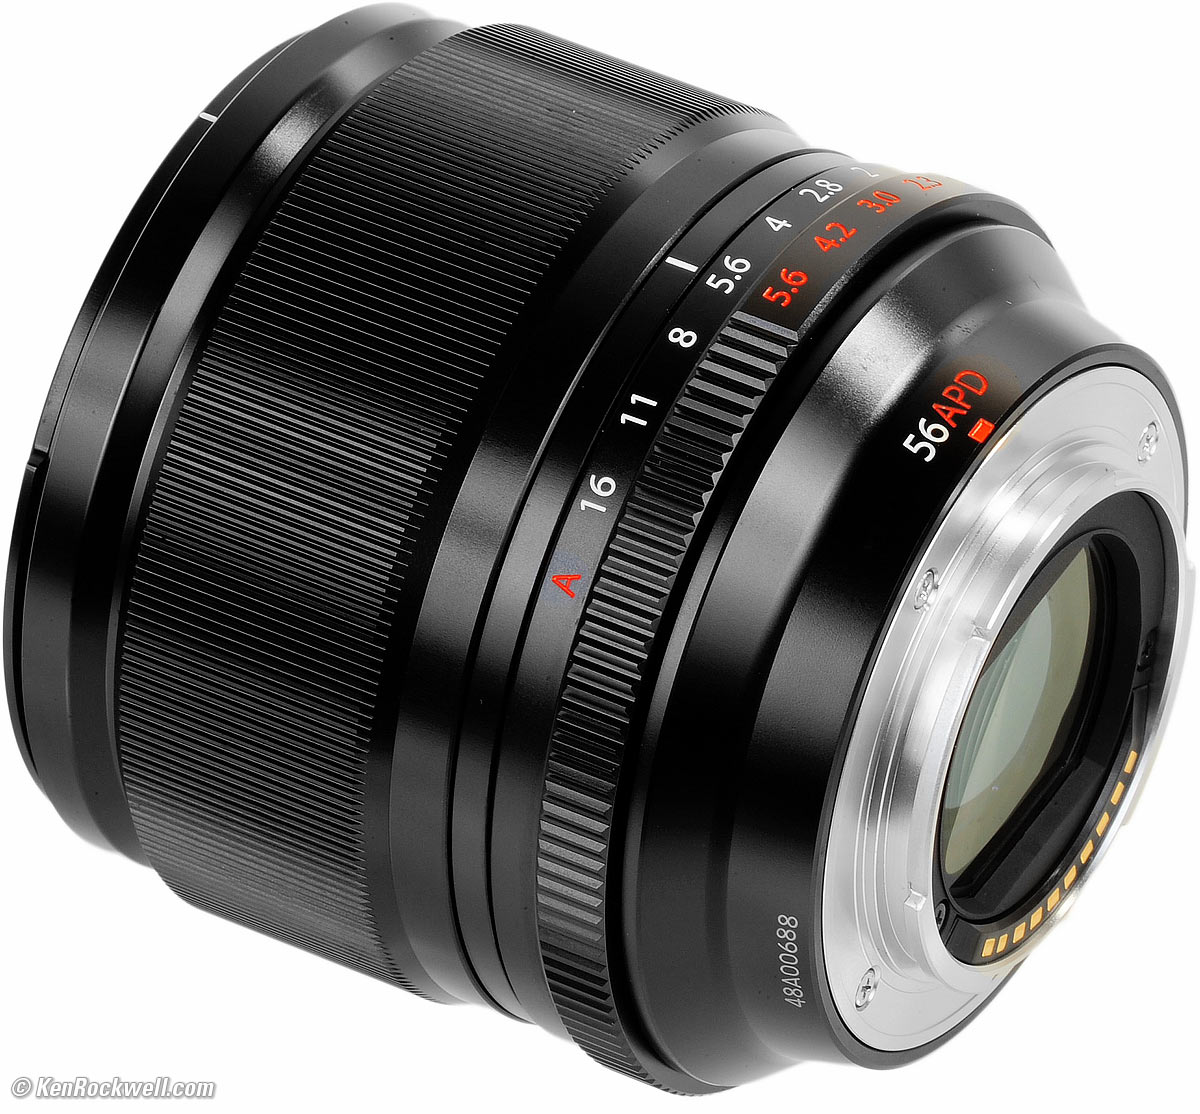 Fuji 56mm f/1.2 APD Review